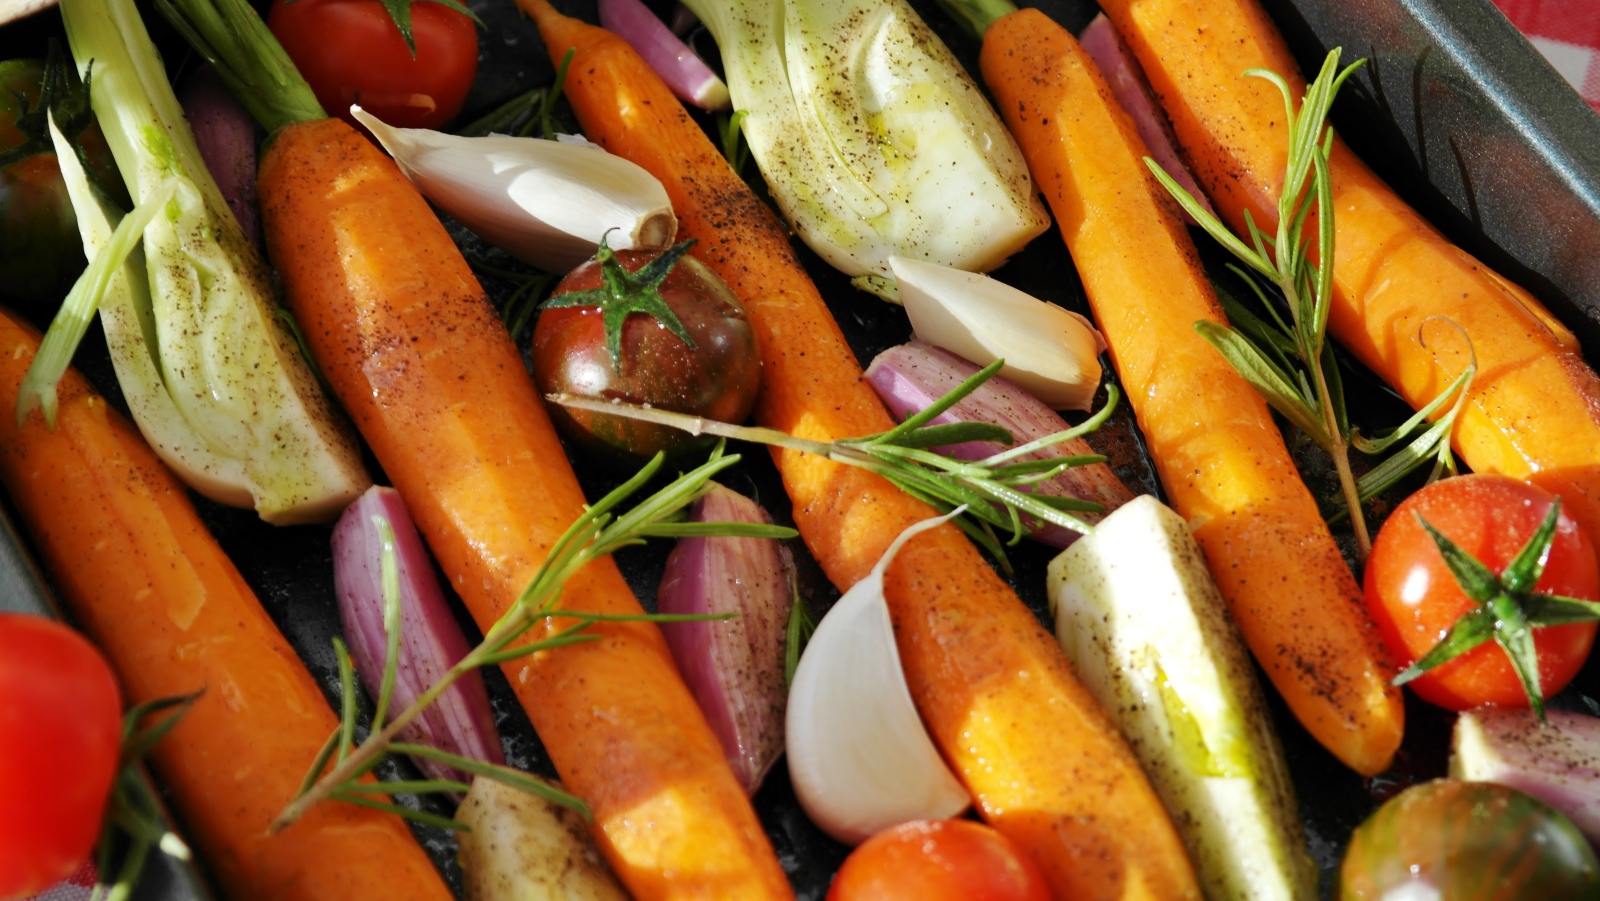 Health benefits of plant foods